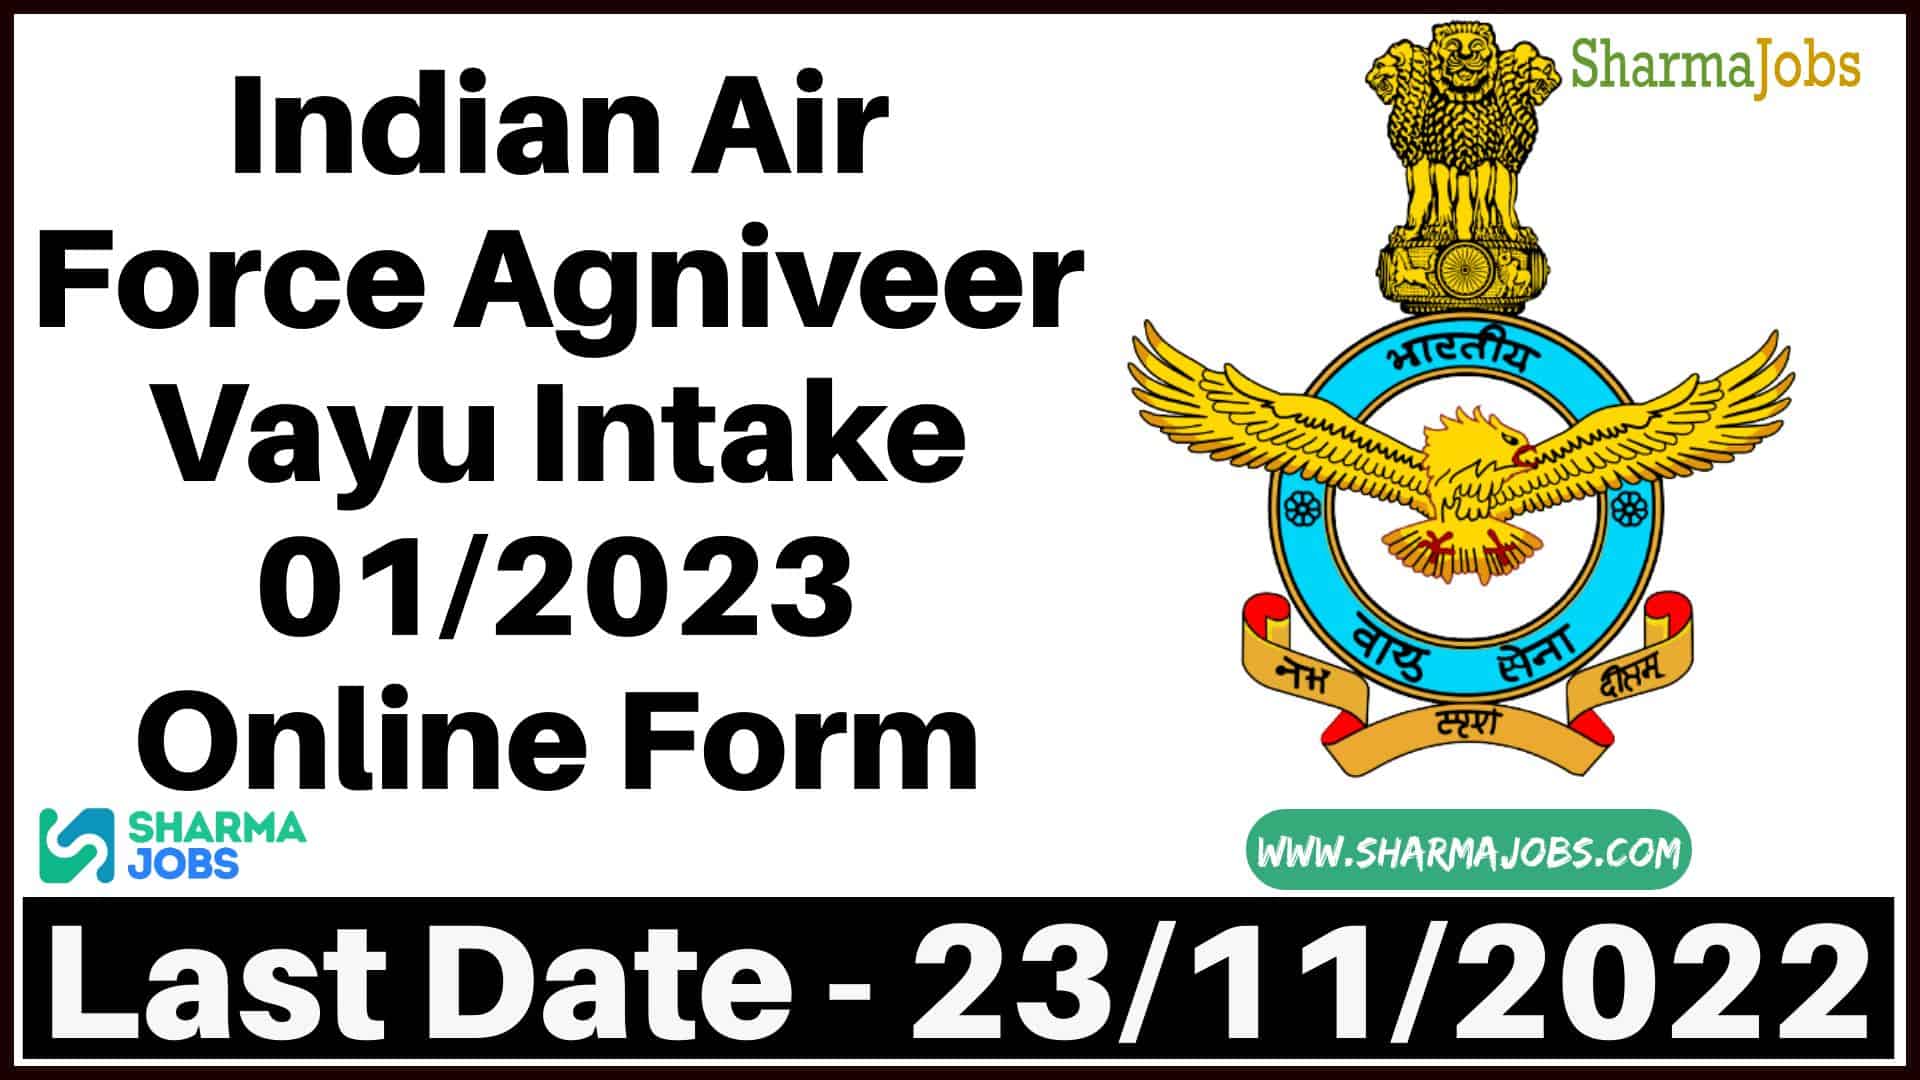 Indian Air Force Agniveer Vayu Intake 01/2023 Online Form